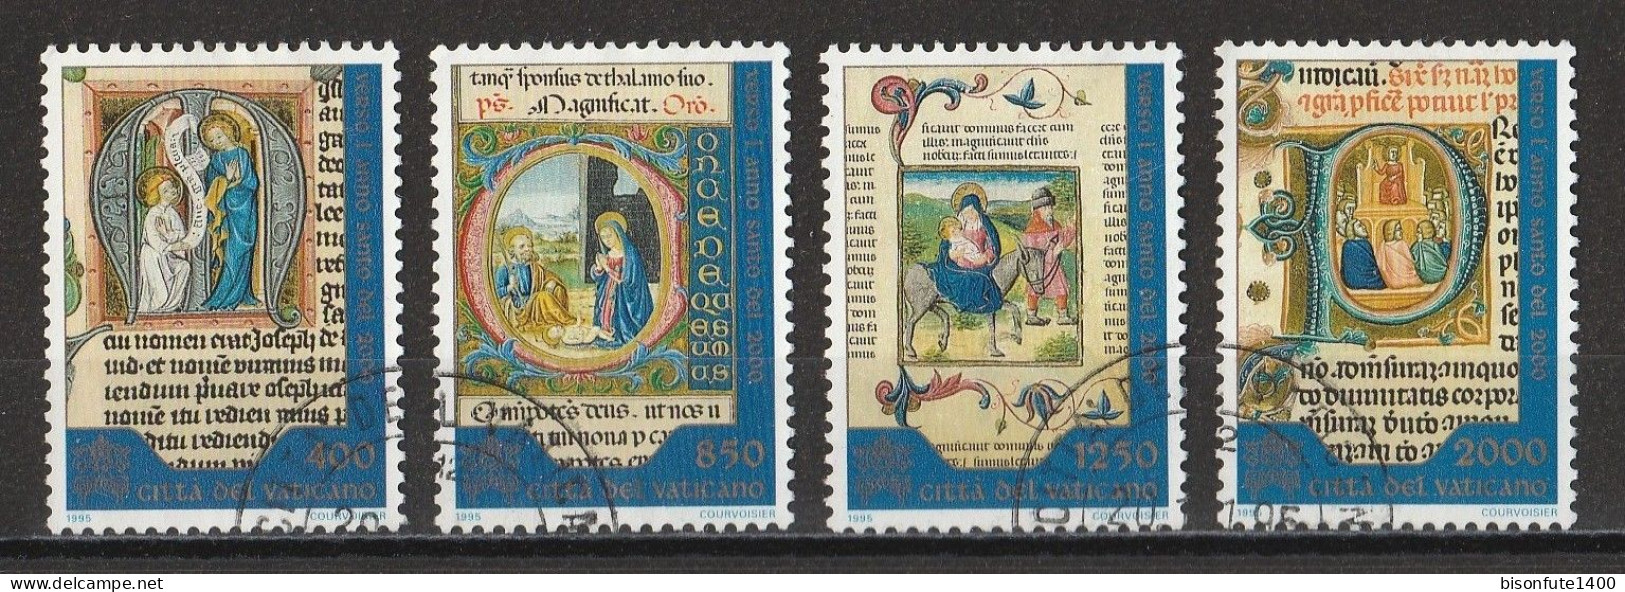 Vatican 1995 : Timbres Yvert & Tellier N° 1025 - 1026 - 1027 Et 1028 Oblitérés - Usados